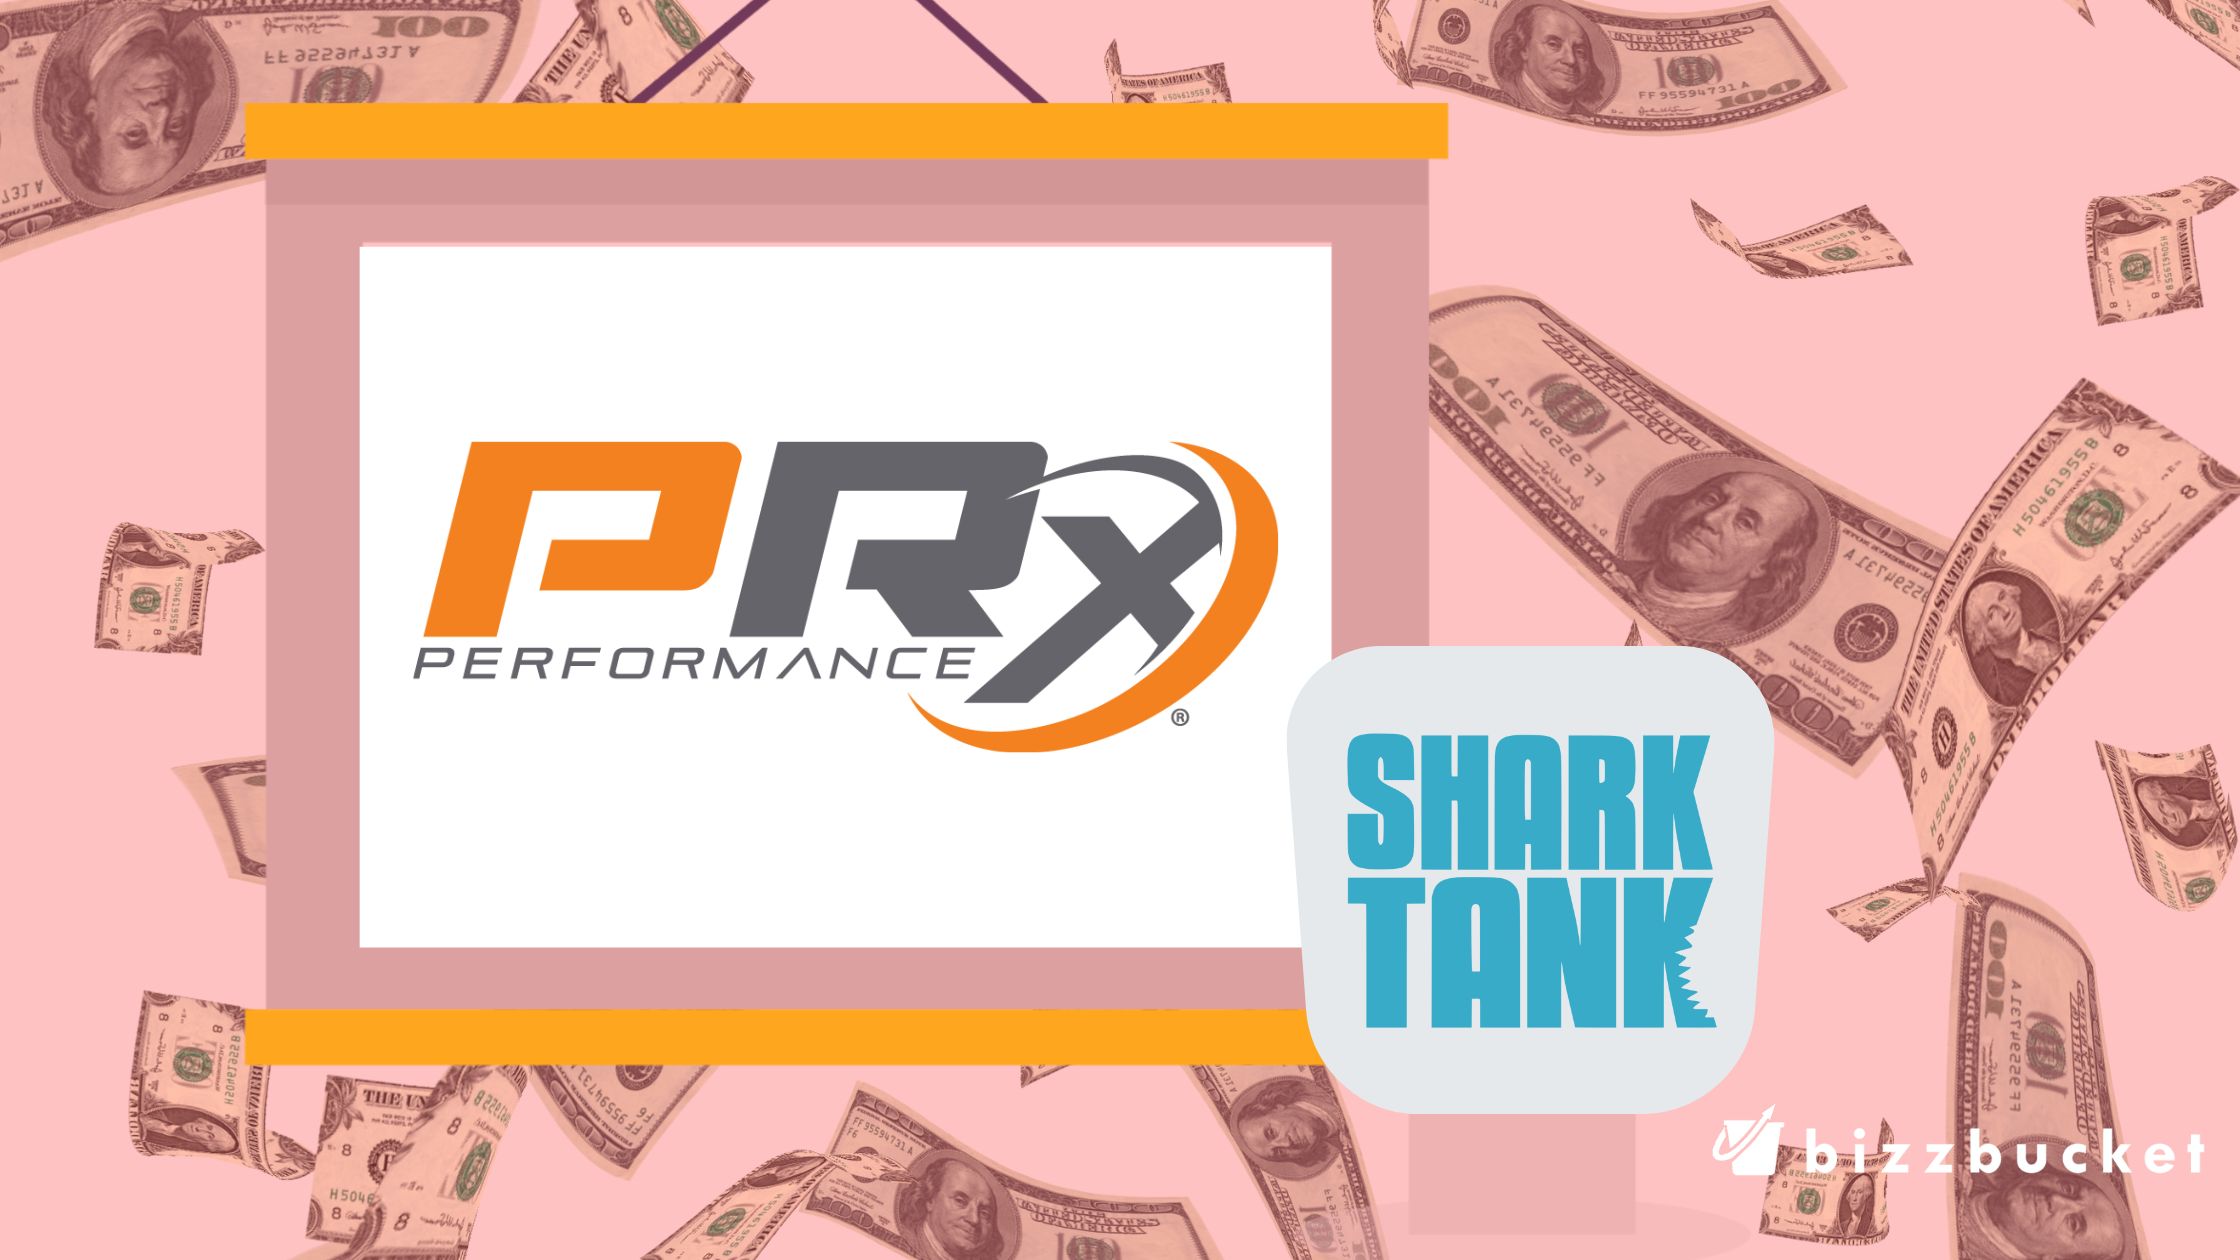 Prx Performance shark tank update